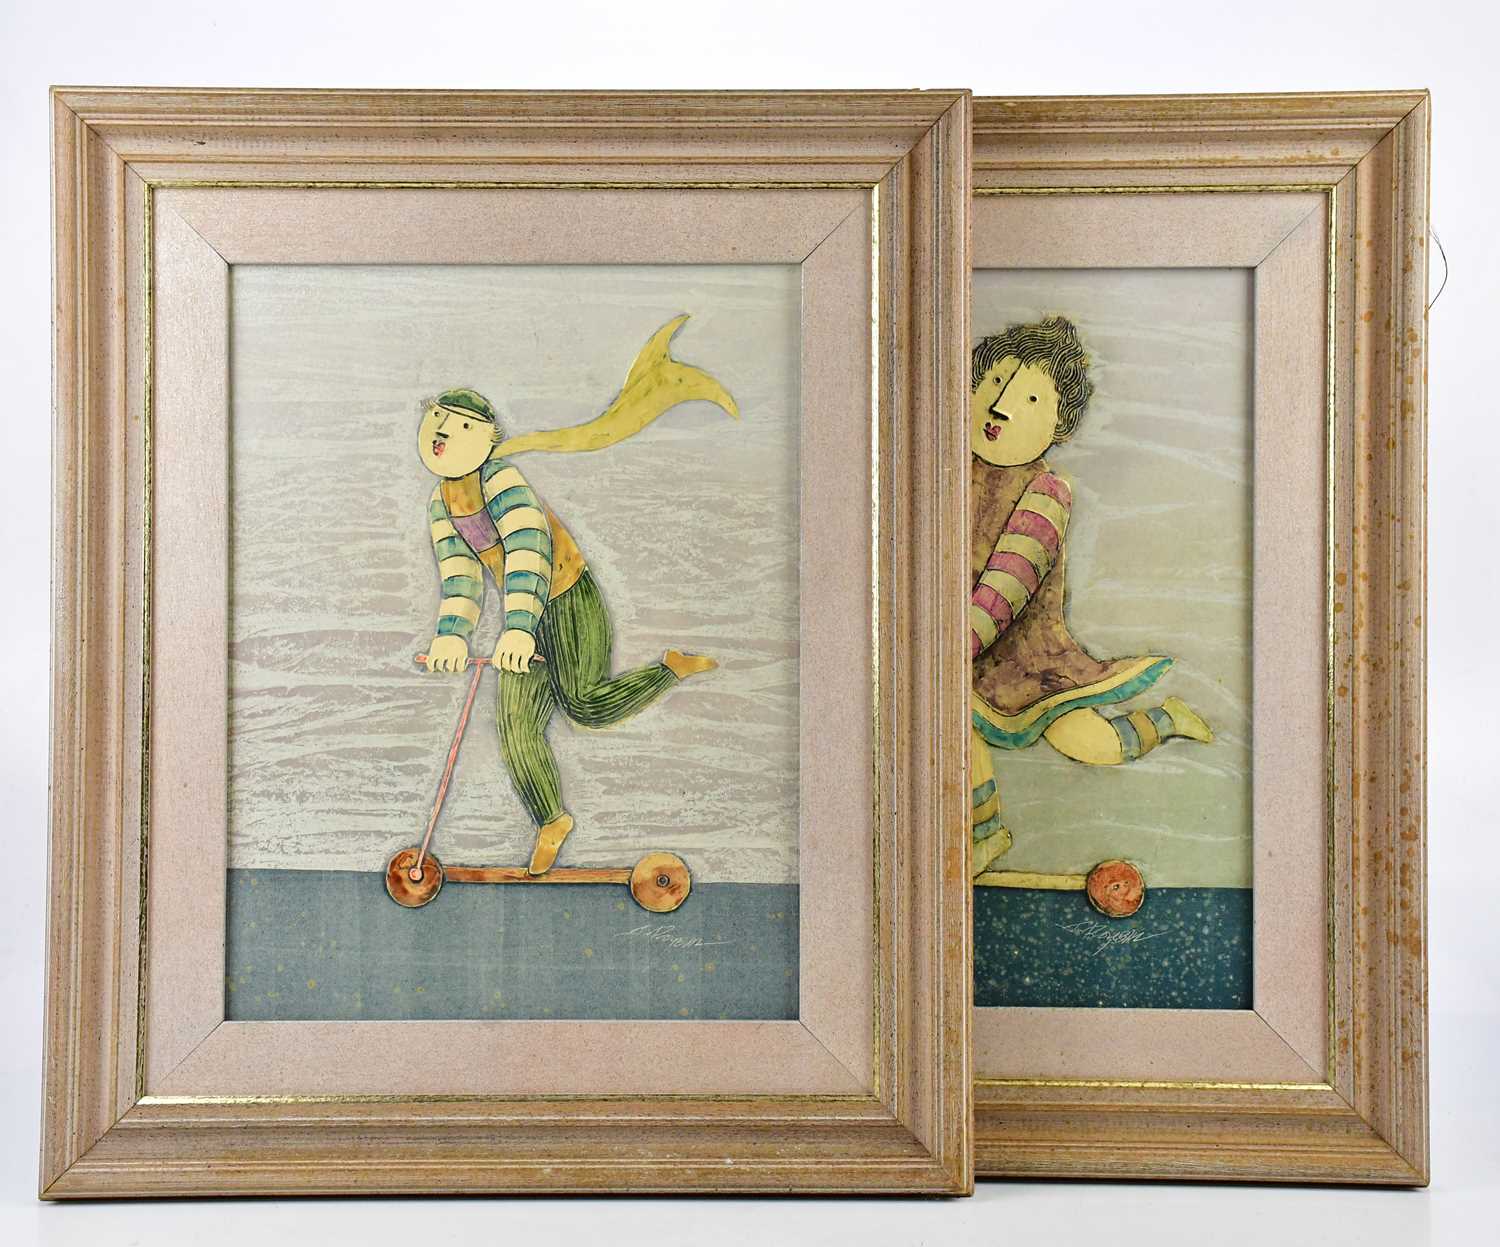 † J ROYBAL; pair of oils, children playing, signed, 41 x 32cm, framed (2).